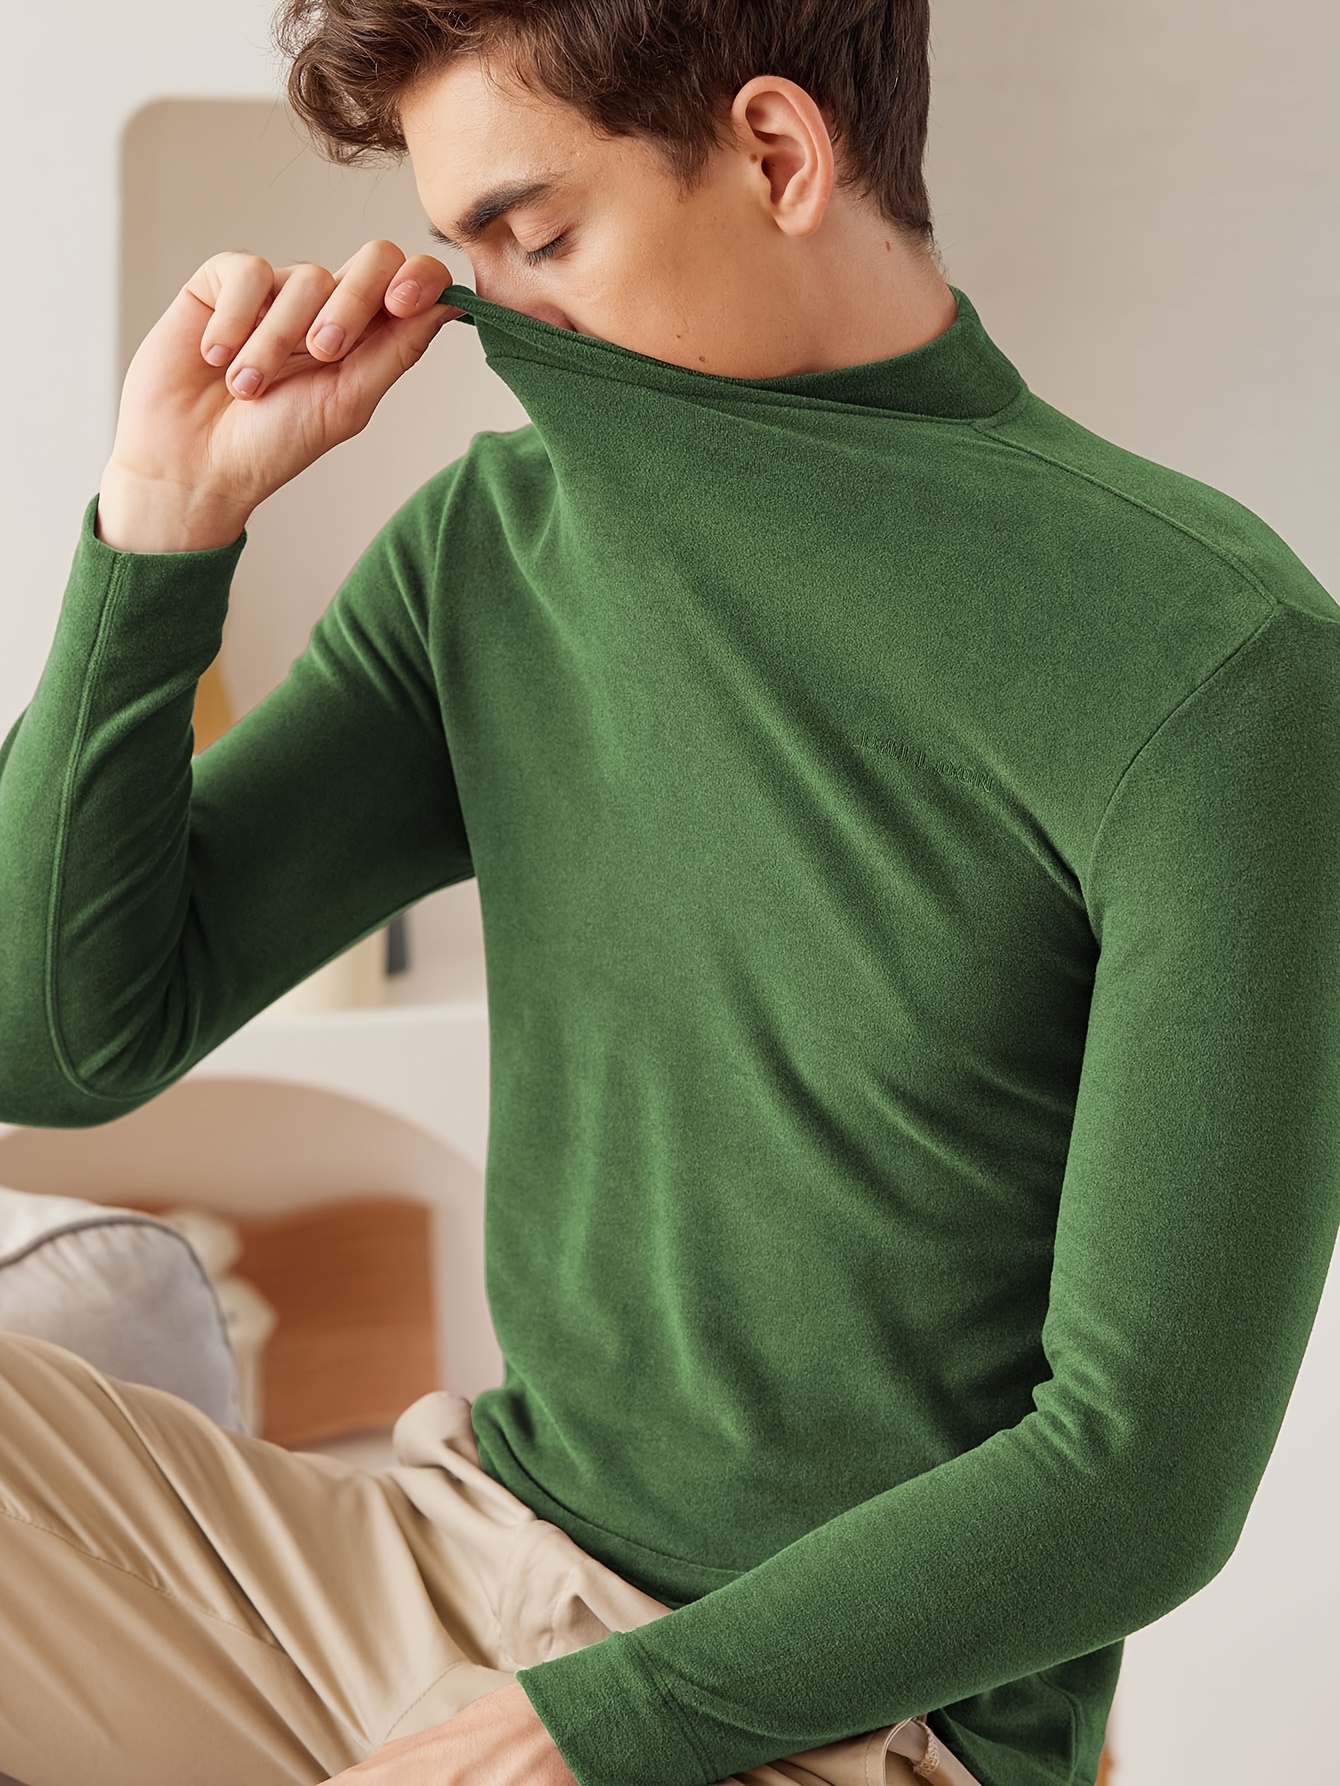 Camiseta térmica de manga larga en color verde